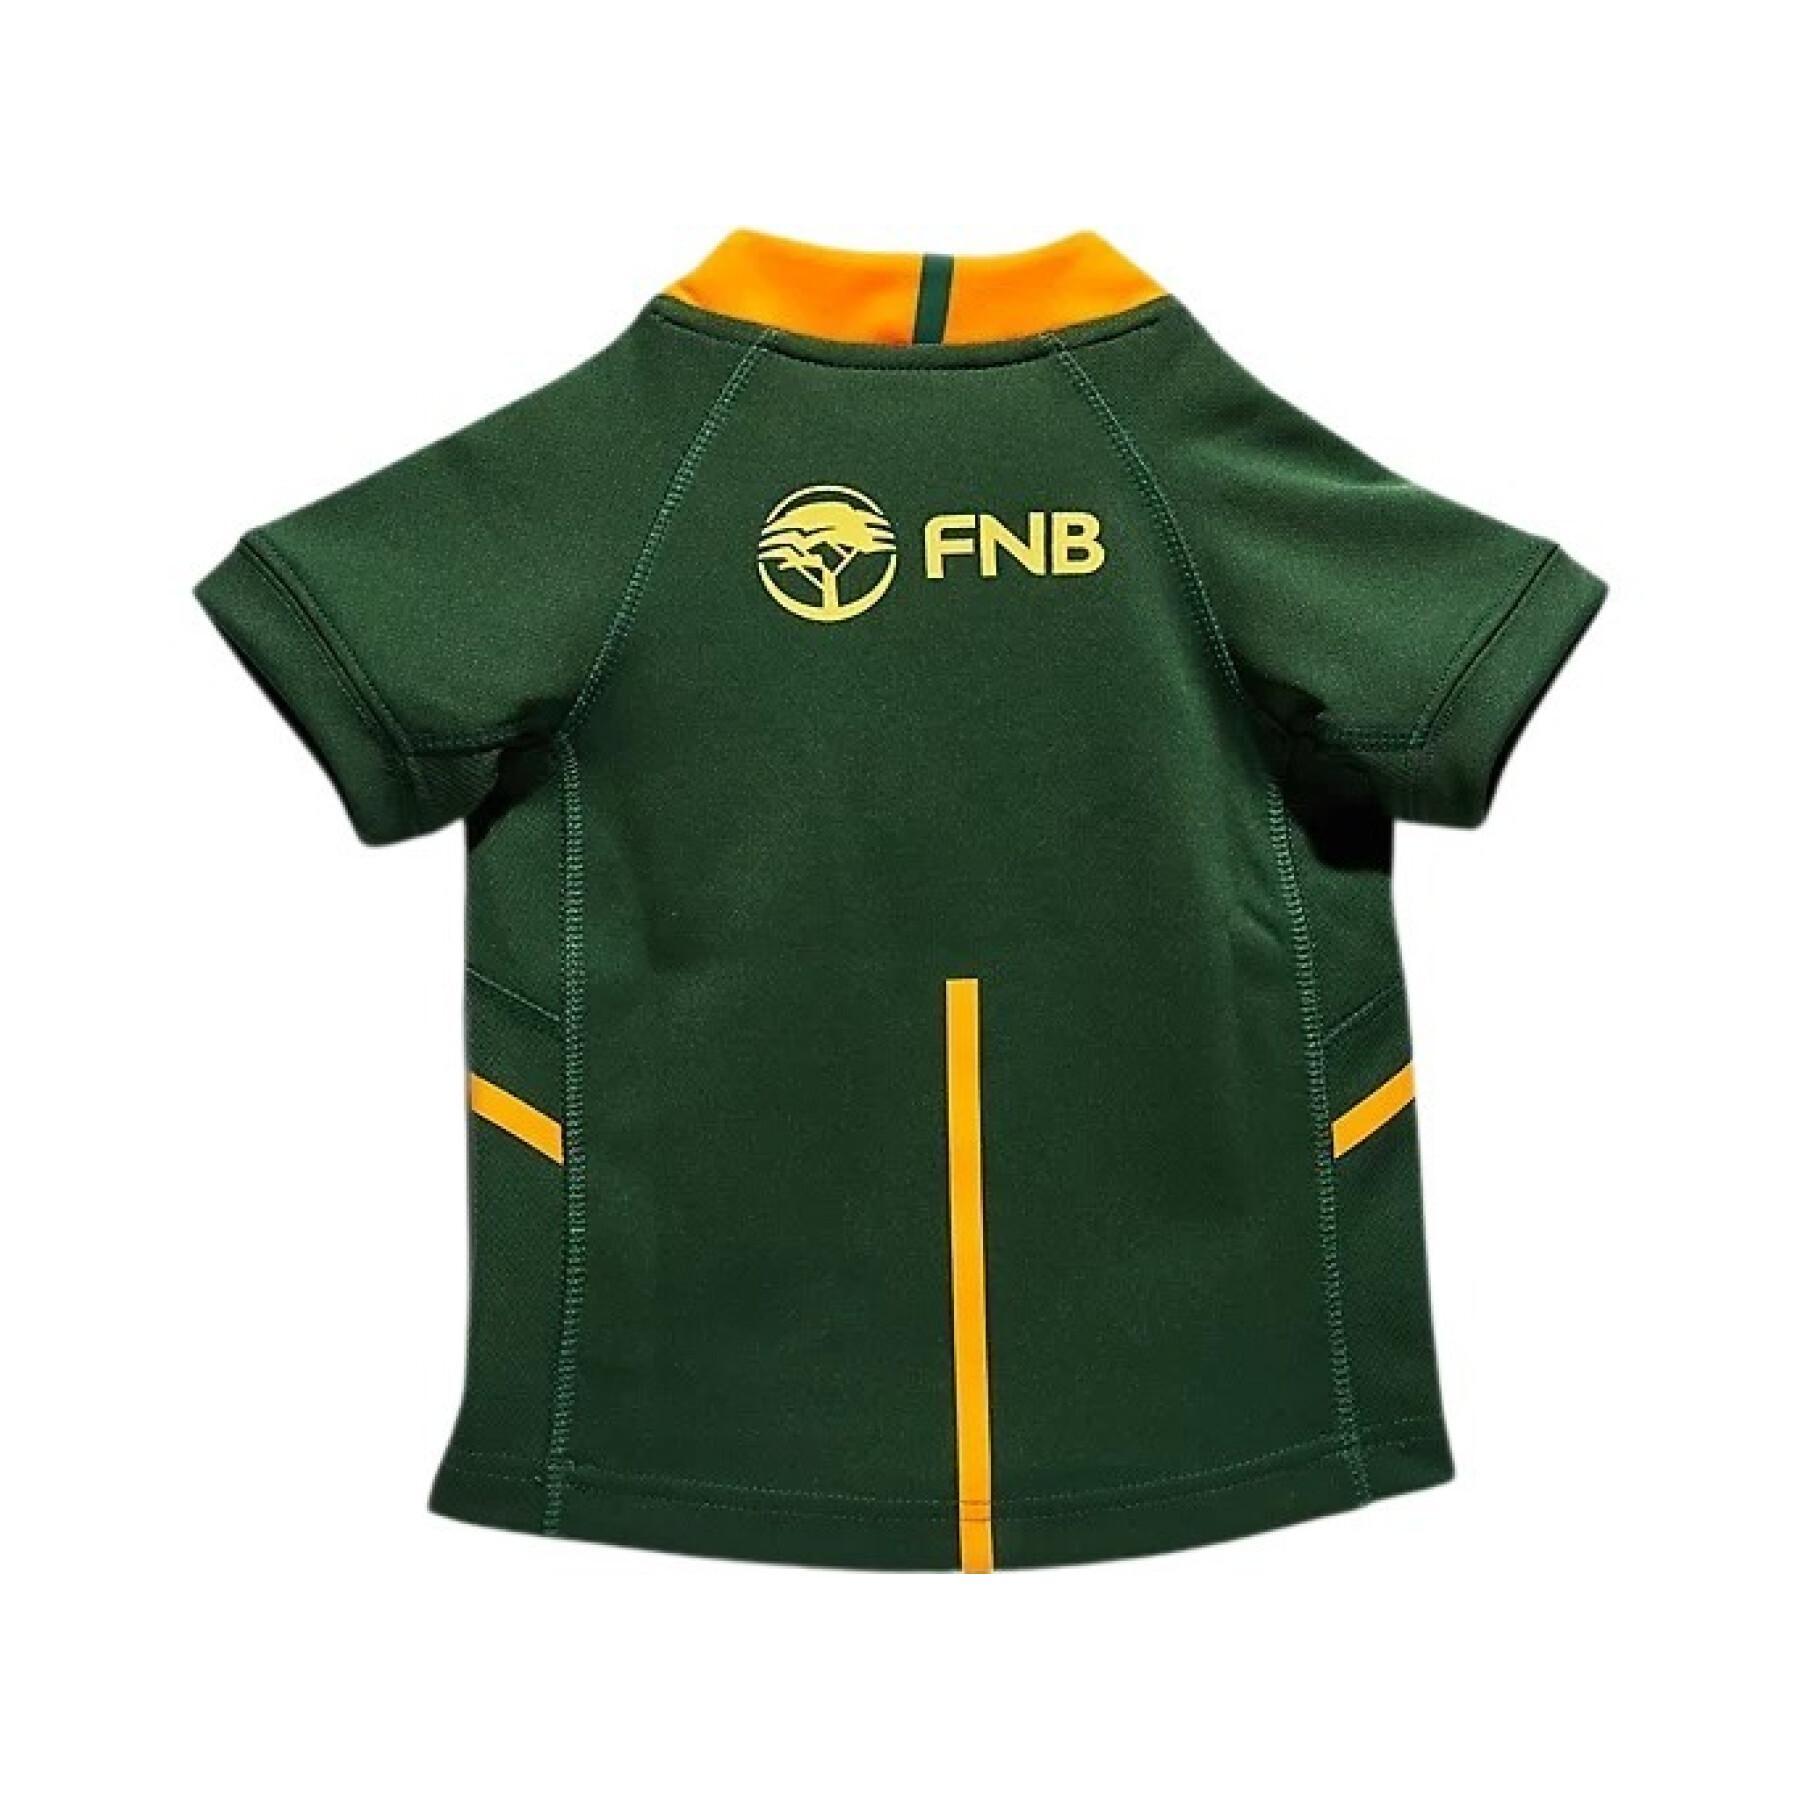 Kid's jersey South Africa Springboks